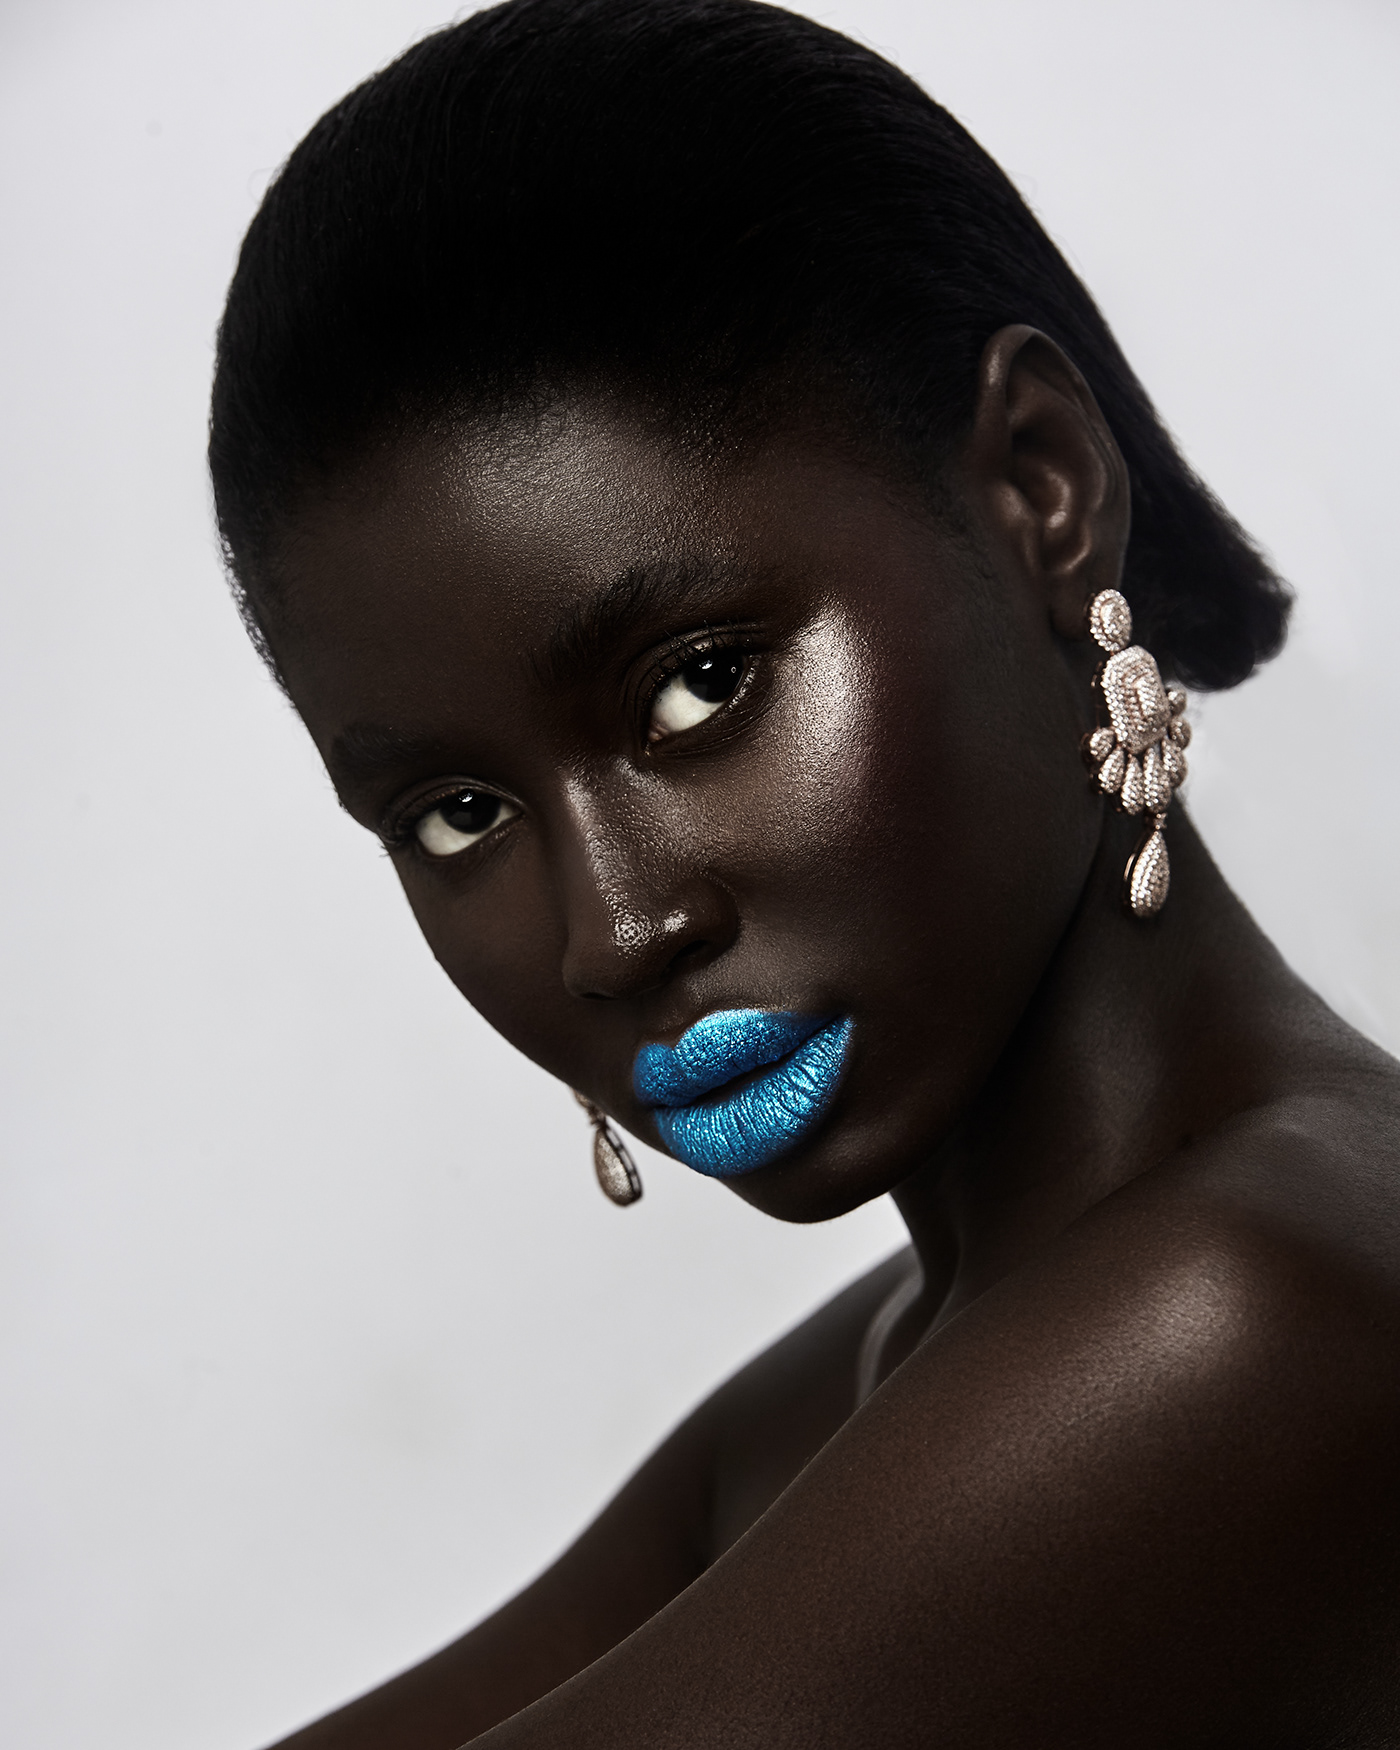 beauty Darkskin softlight Beauty Story Black Skin melanin photographer Photography  portrait